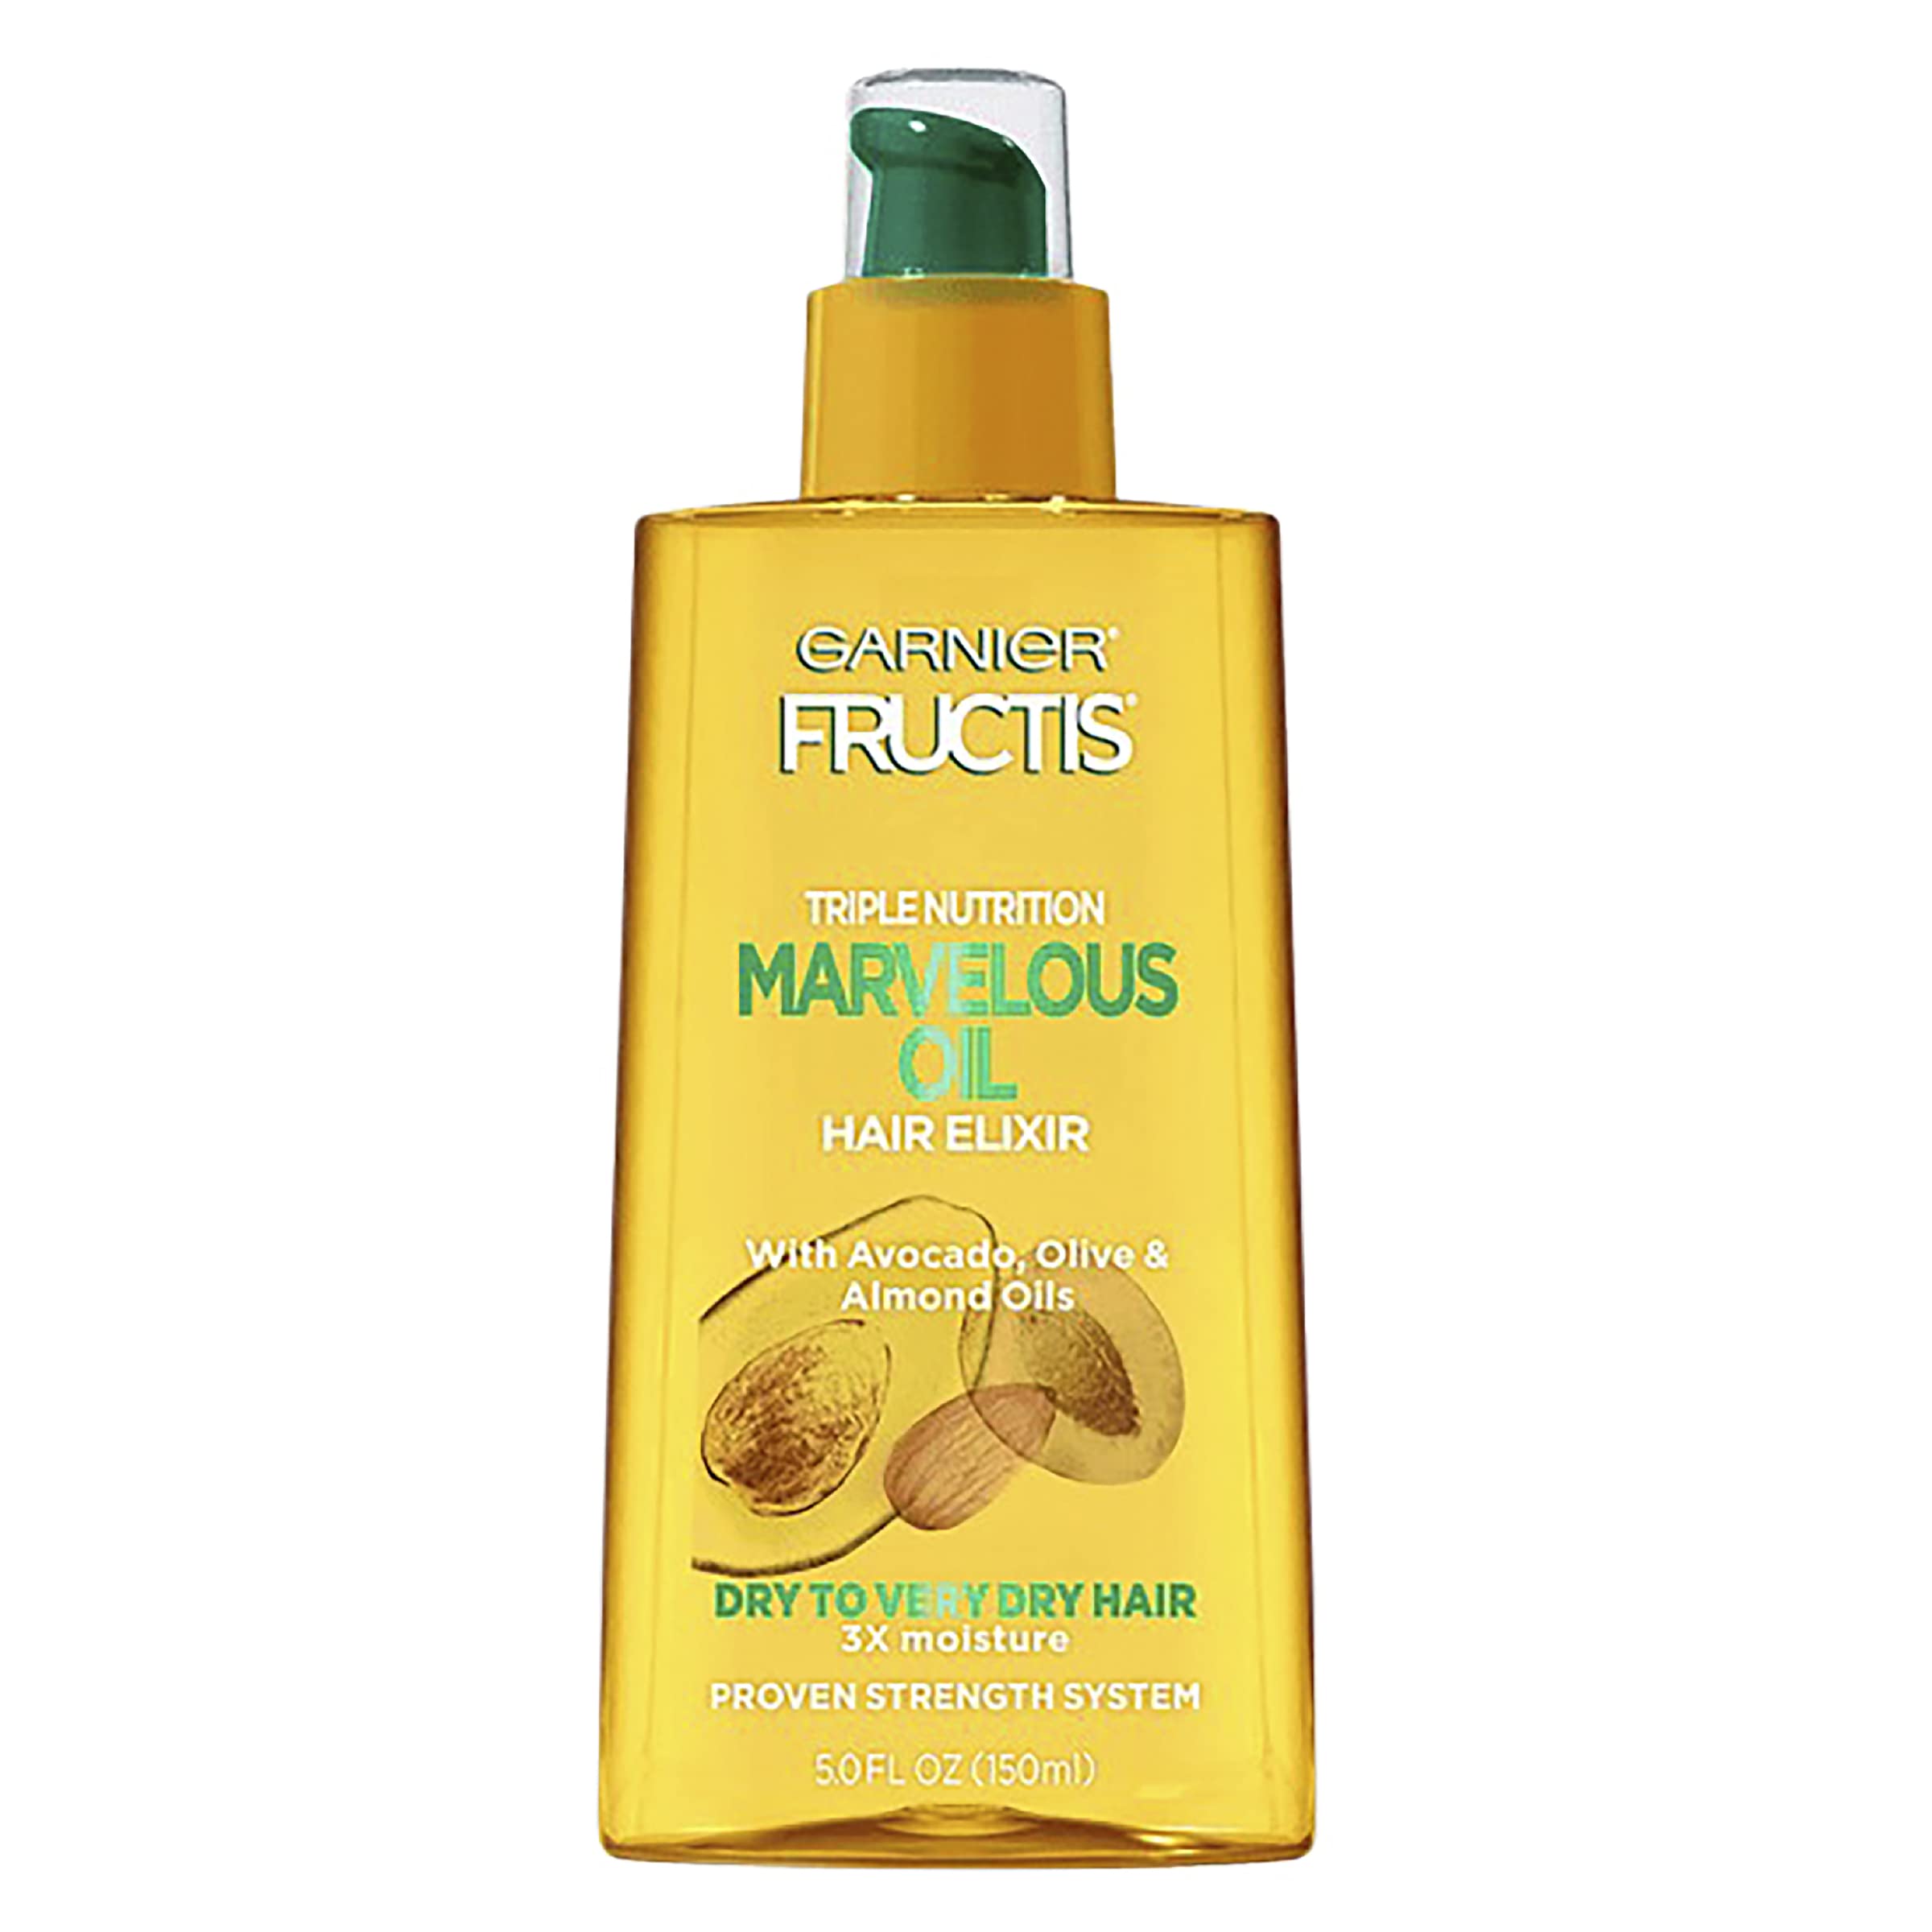 Garnier Fructis Triple Nutrition Marvelous Oil Hair Elixir, 5.0 Fl Oz, 1 Count (Packaging May Vary)